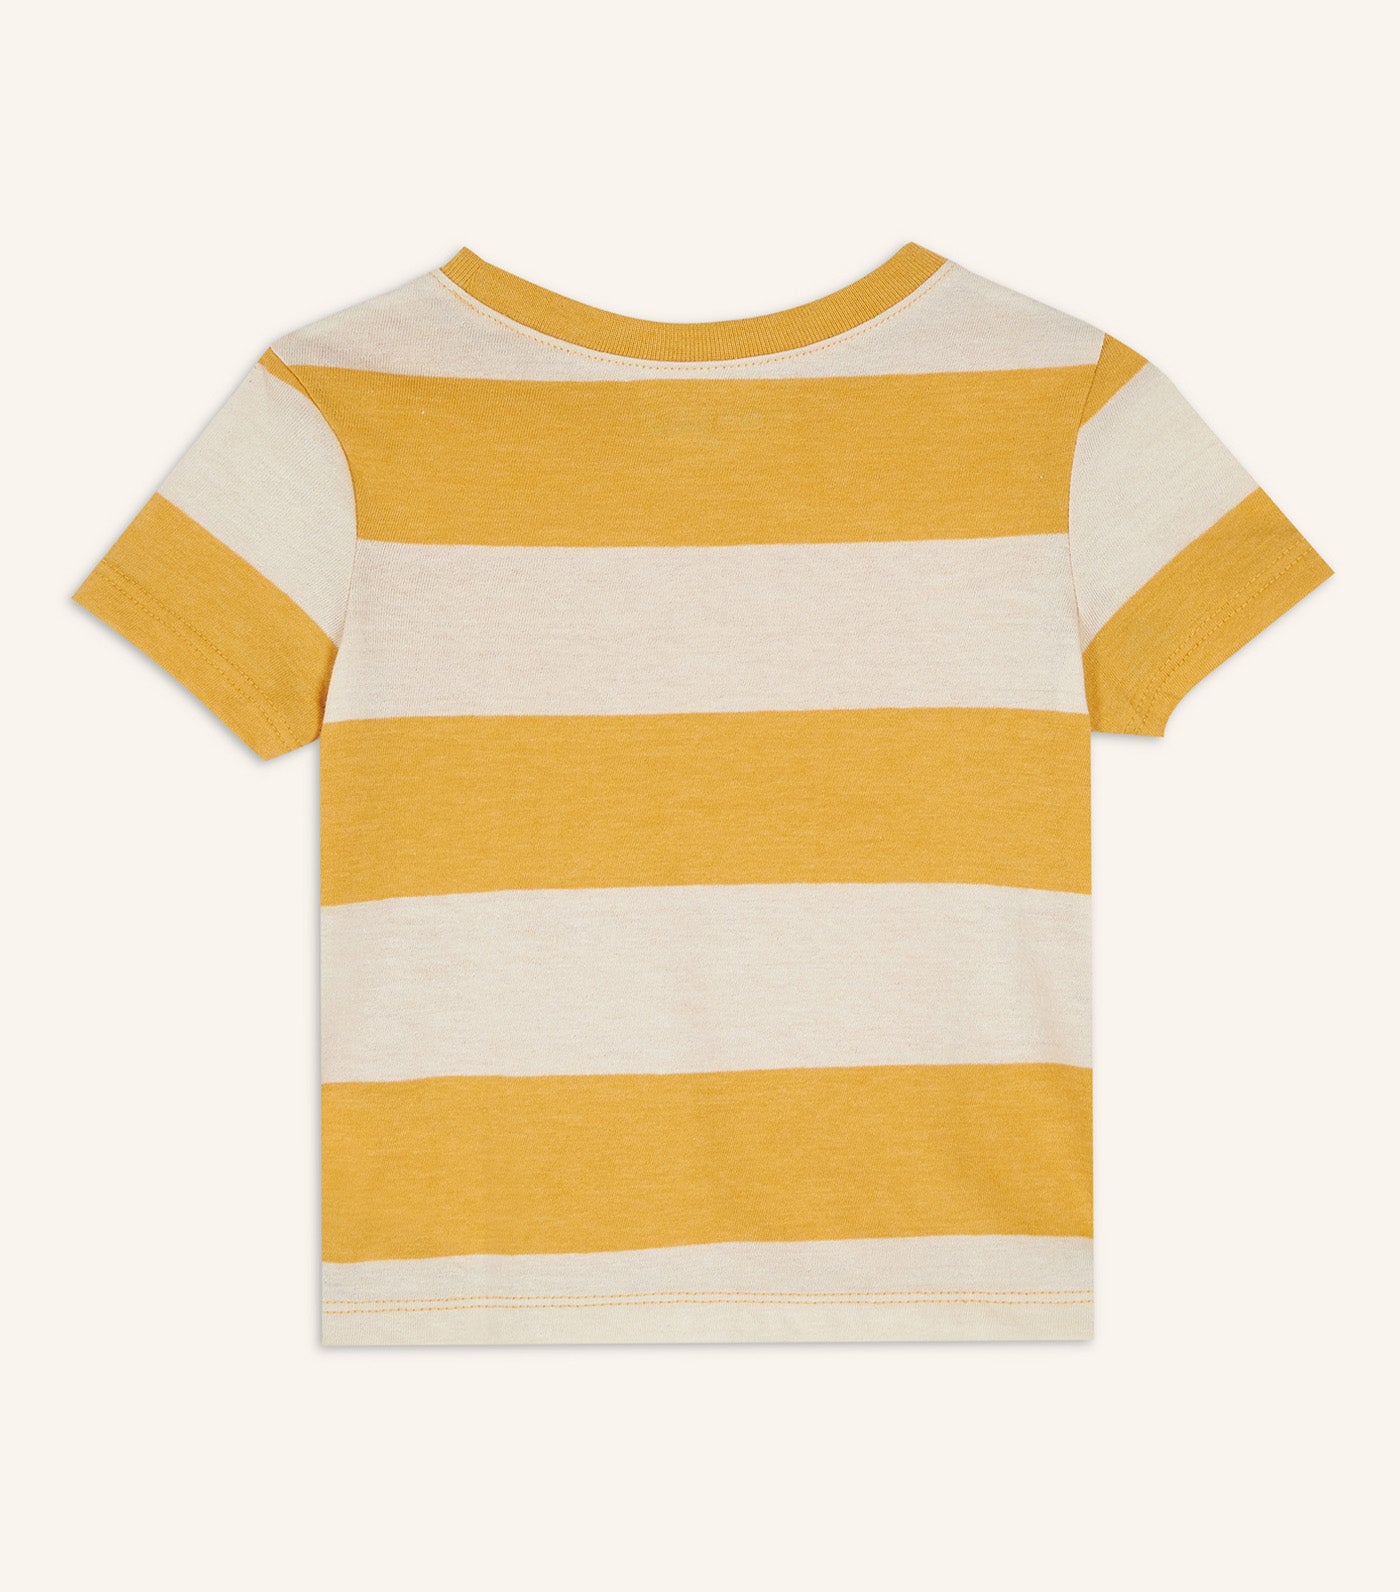 Unisex Printed Short-Sleeve T-Shirt for Toddler - Yellow Stripe